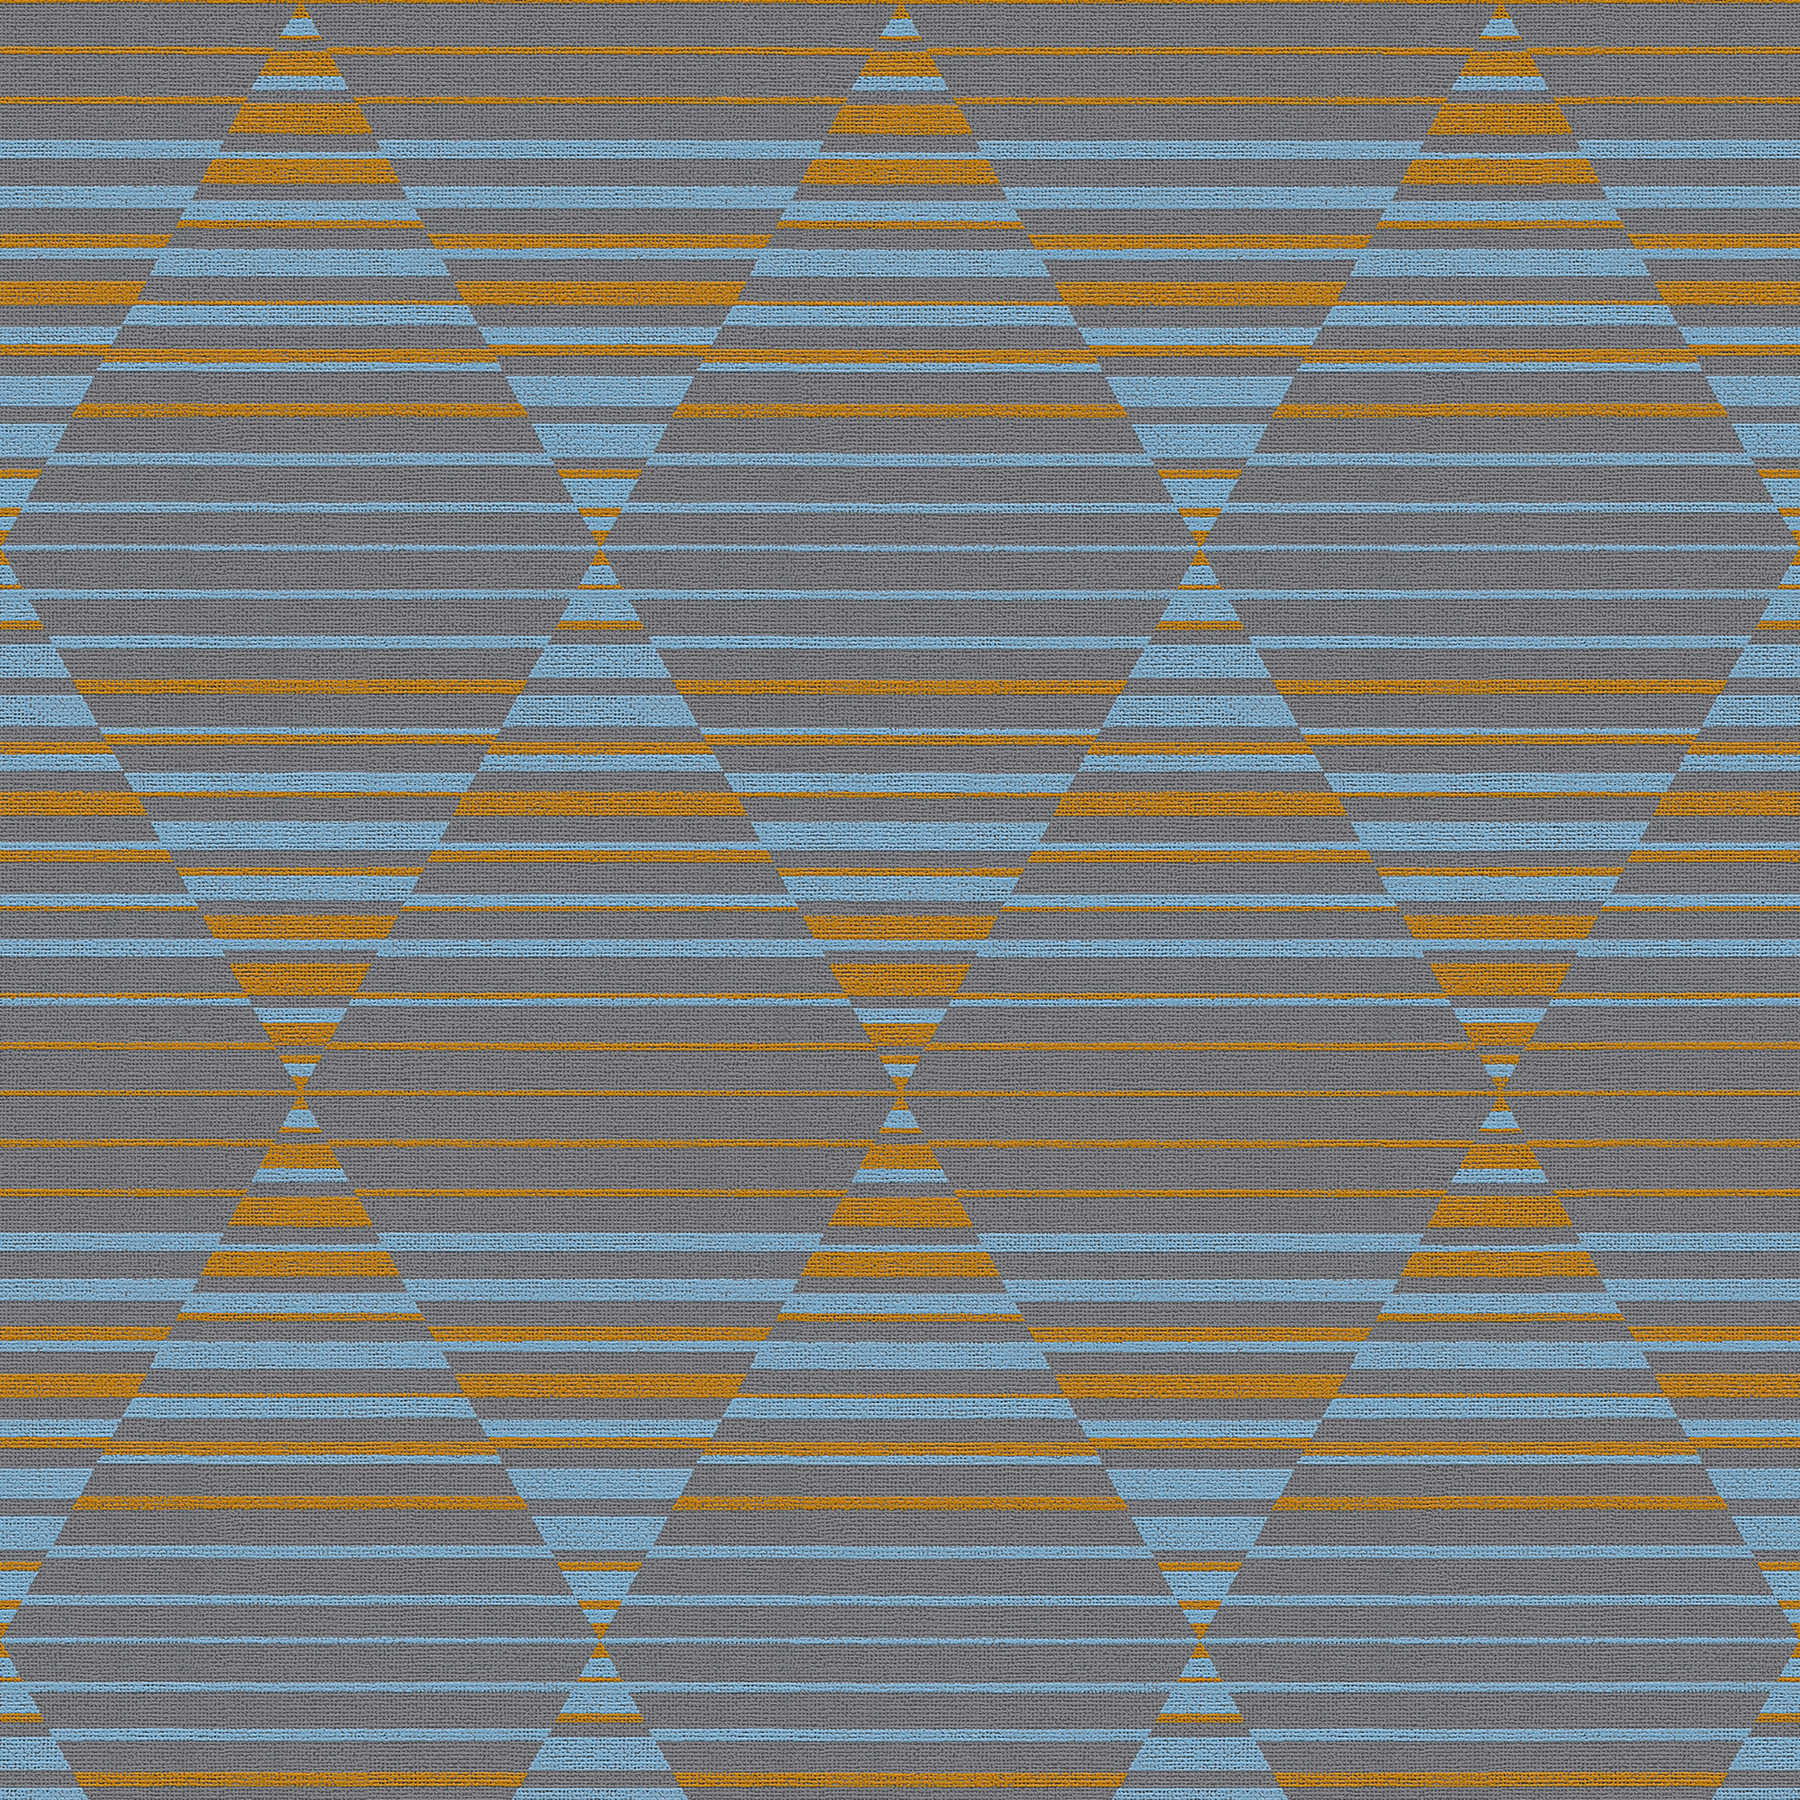 Retro wallpaper 70s pattern stripes & diamonds - grey, blue, orange
